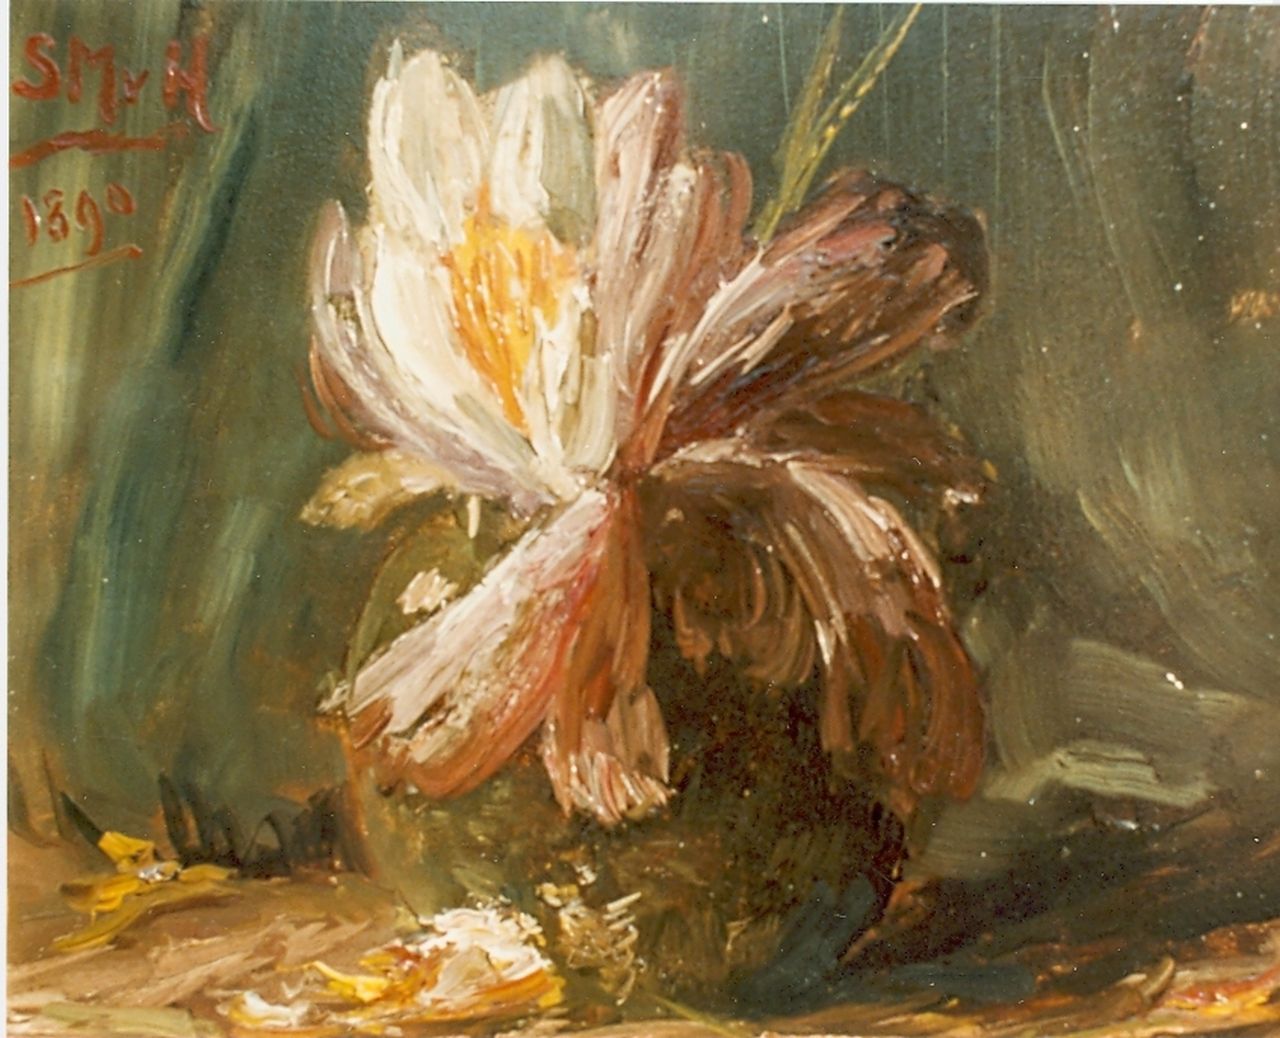 Mesdag-van Houten S.  | Sina 'Sientje' Mesdag-van Houten, A flower still life, Öl auf Holz 24,6 x 33,2 cm, signed u.l. und dated '1890'